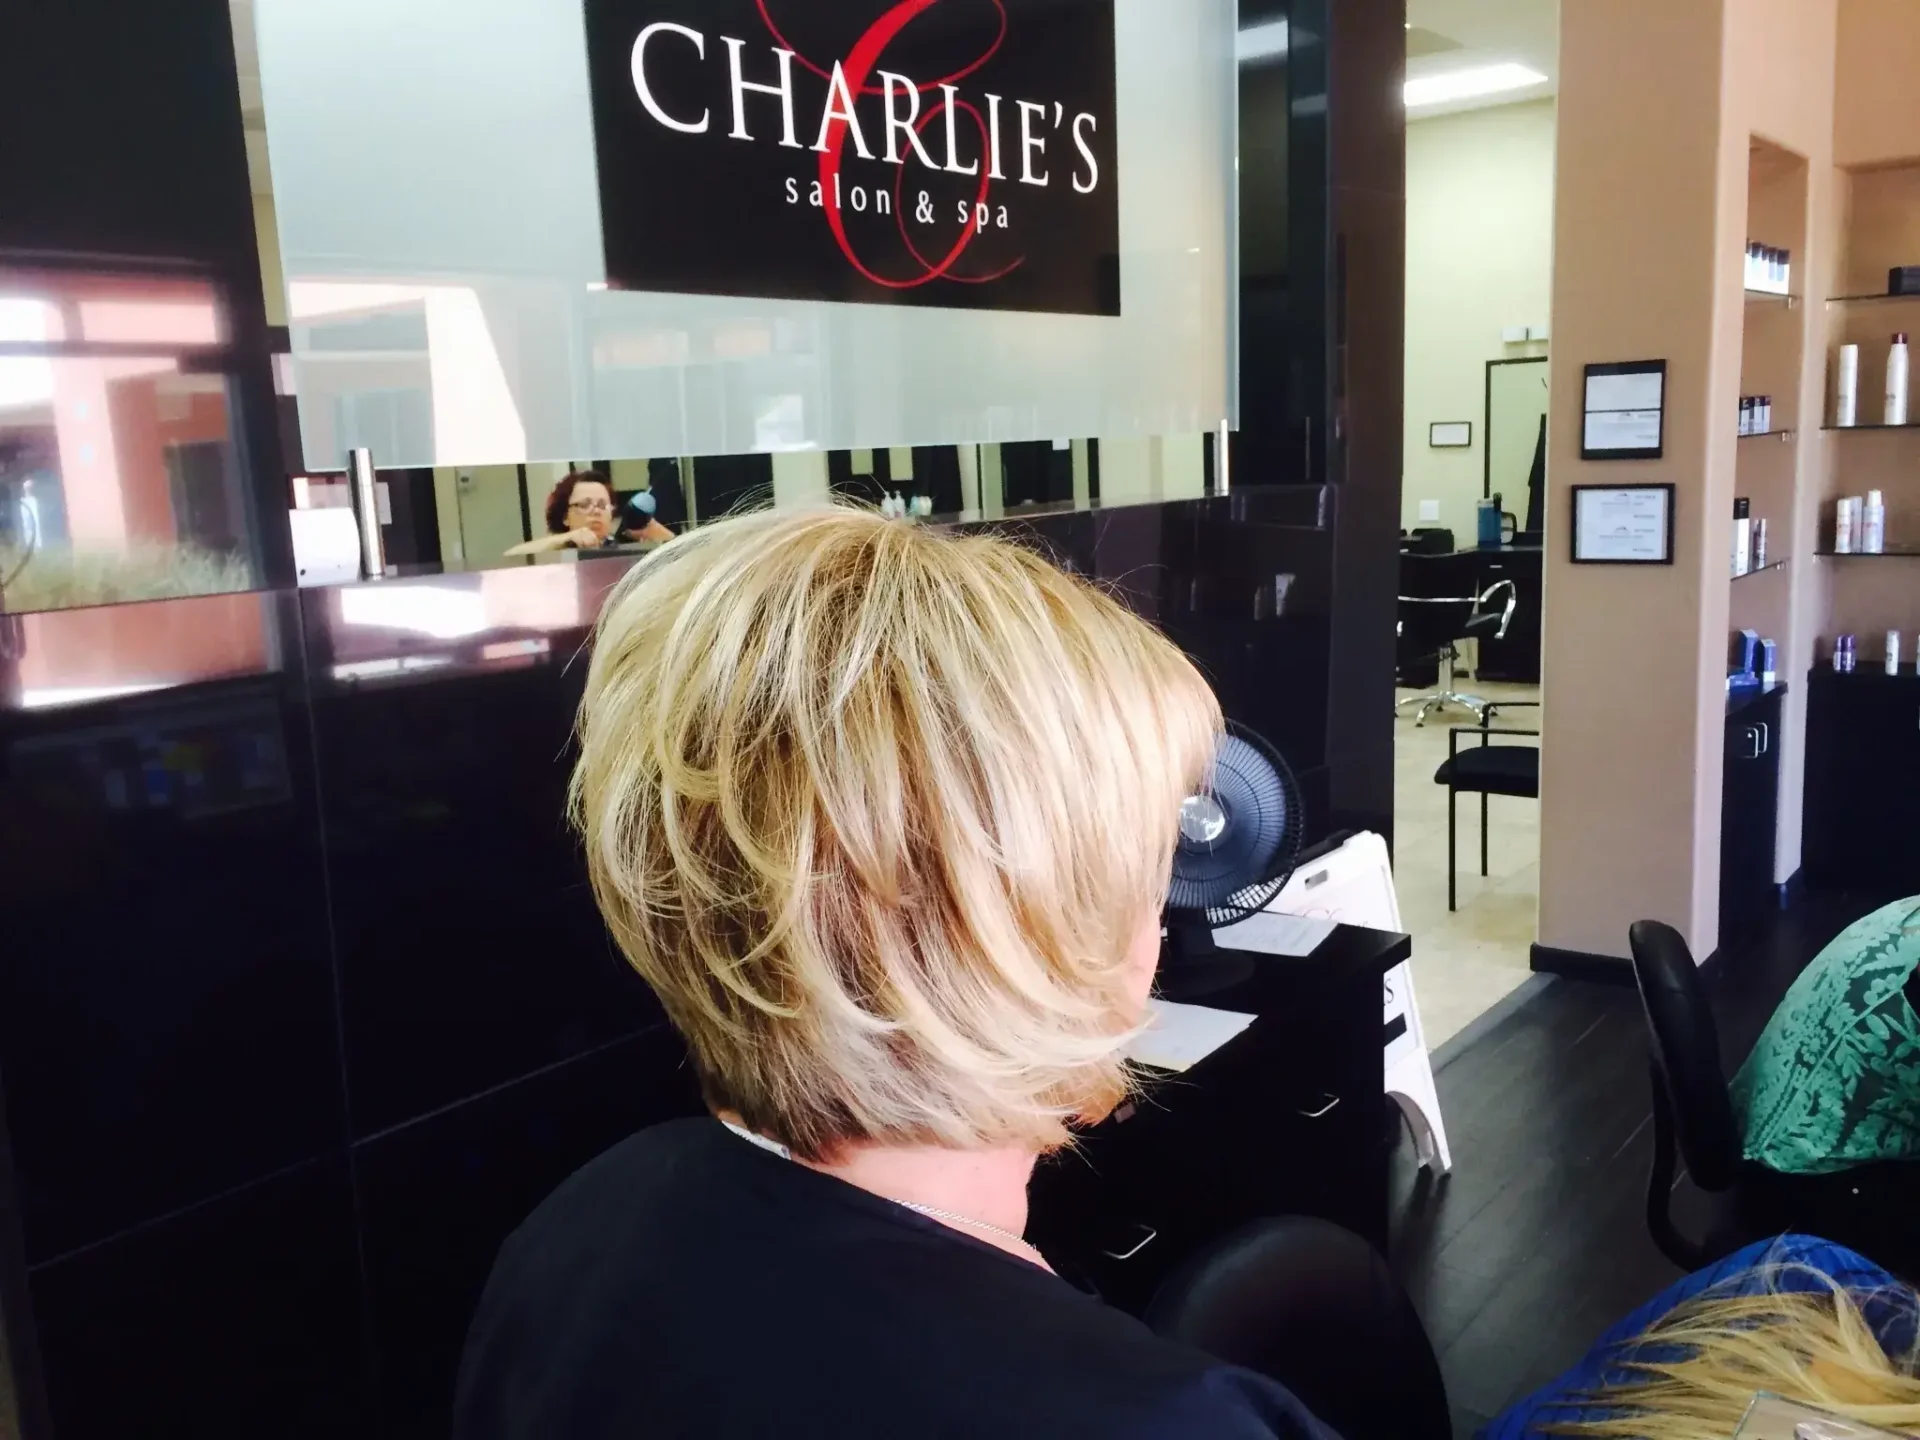 Charlie's Salon & Spa